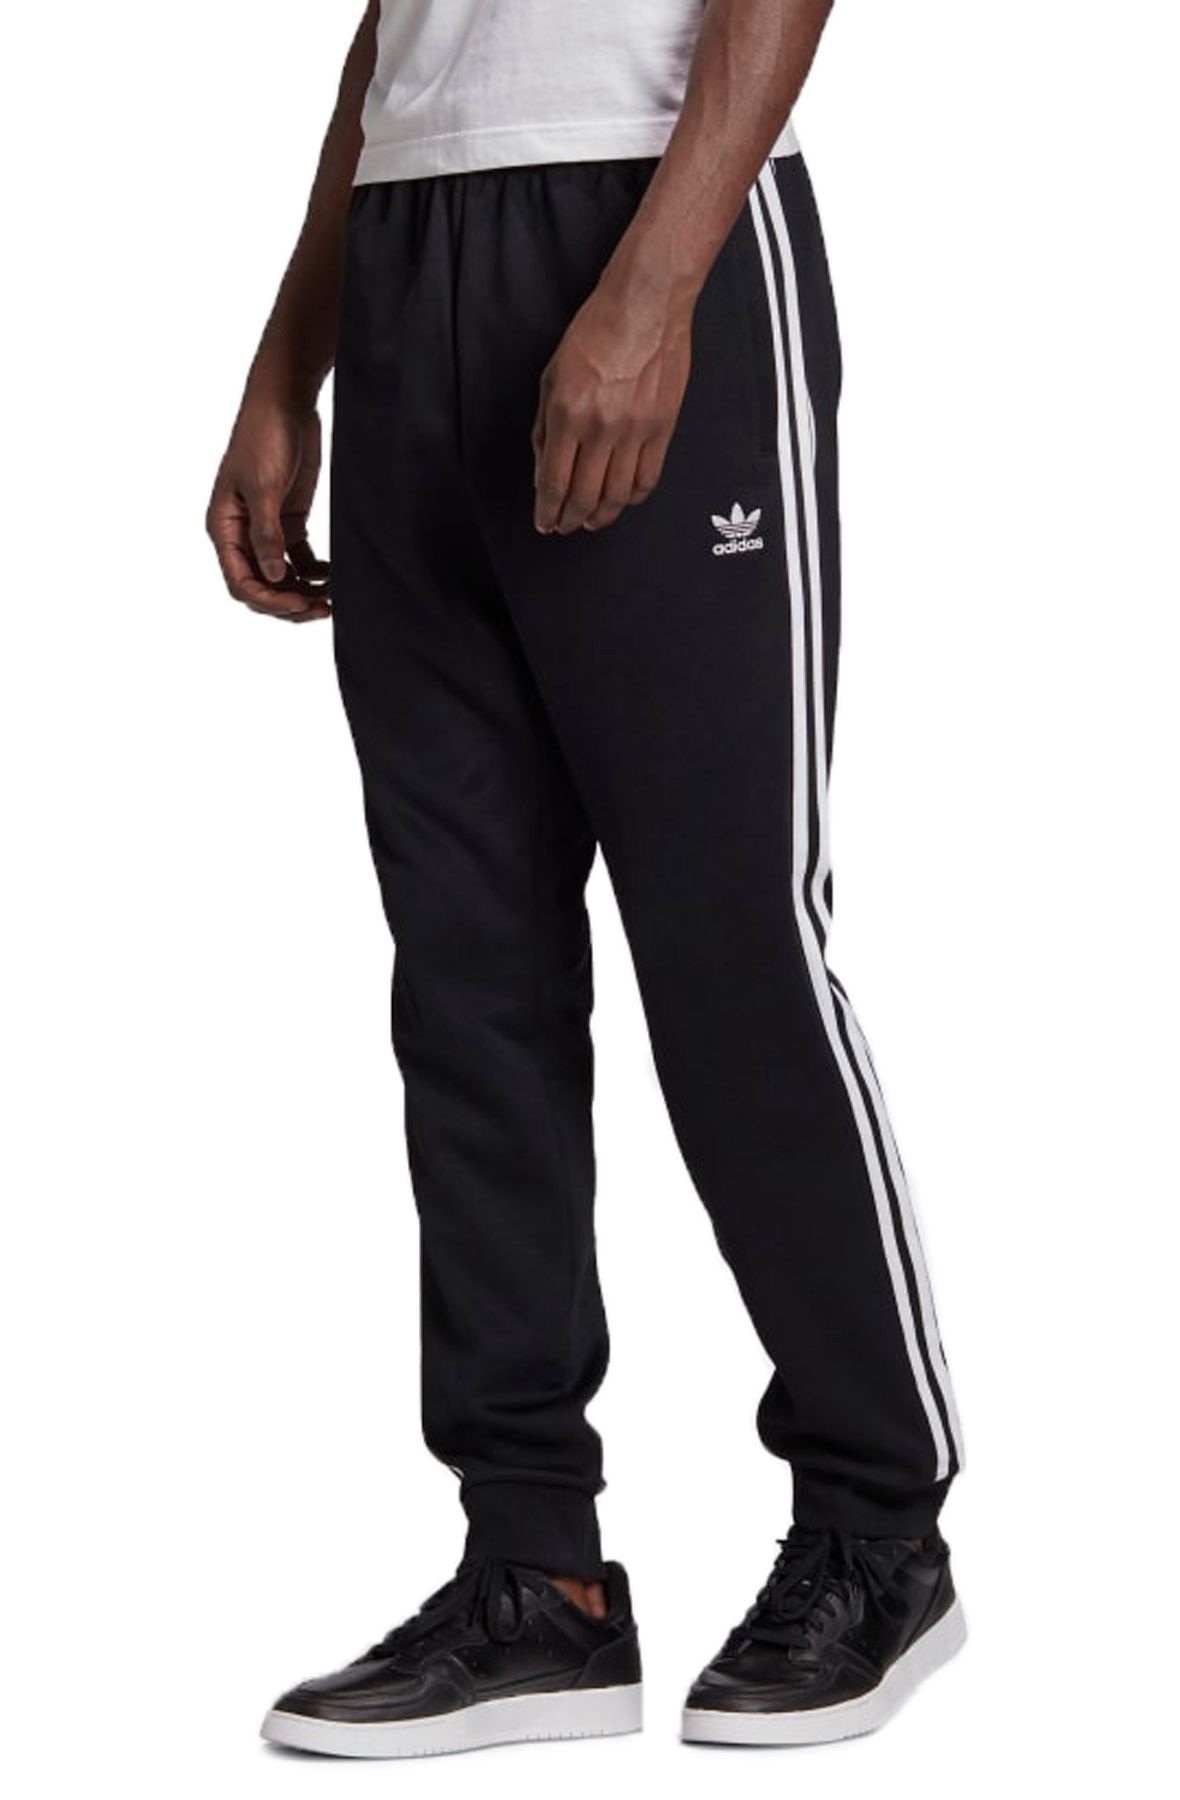 adidas Originals Women's Adicolor Superstar Track Pants, Black, X-Large